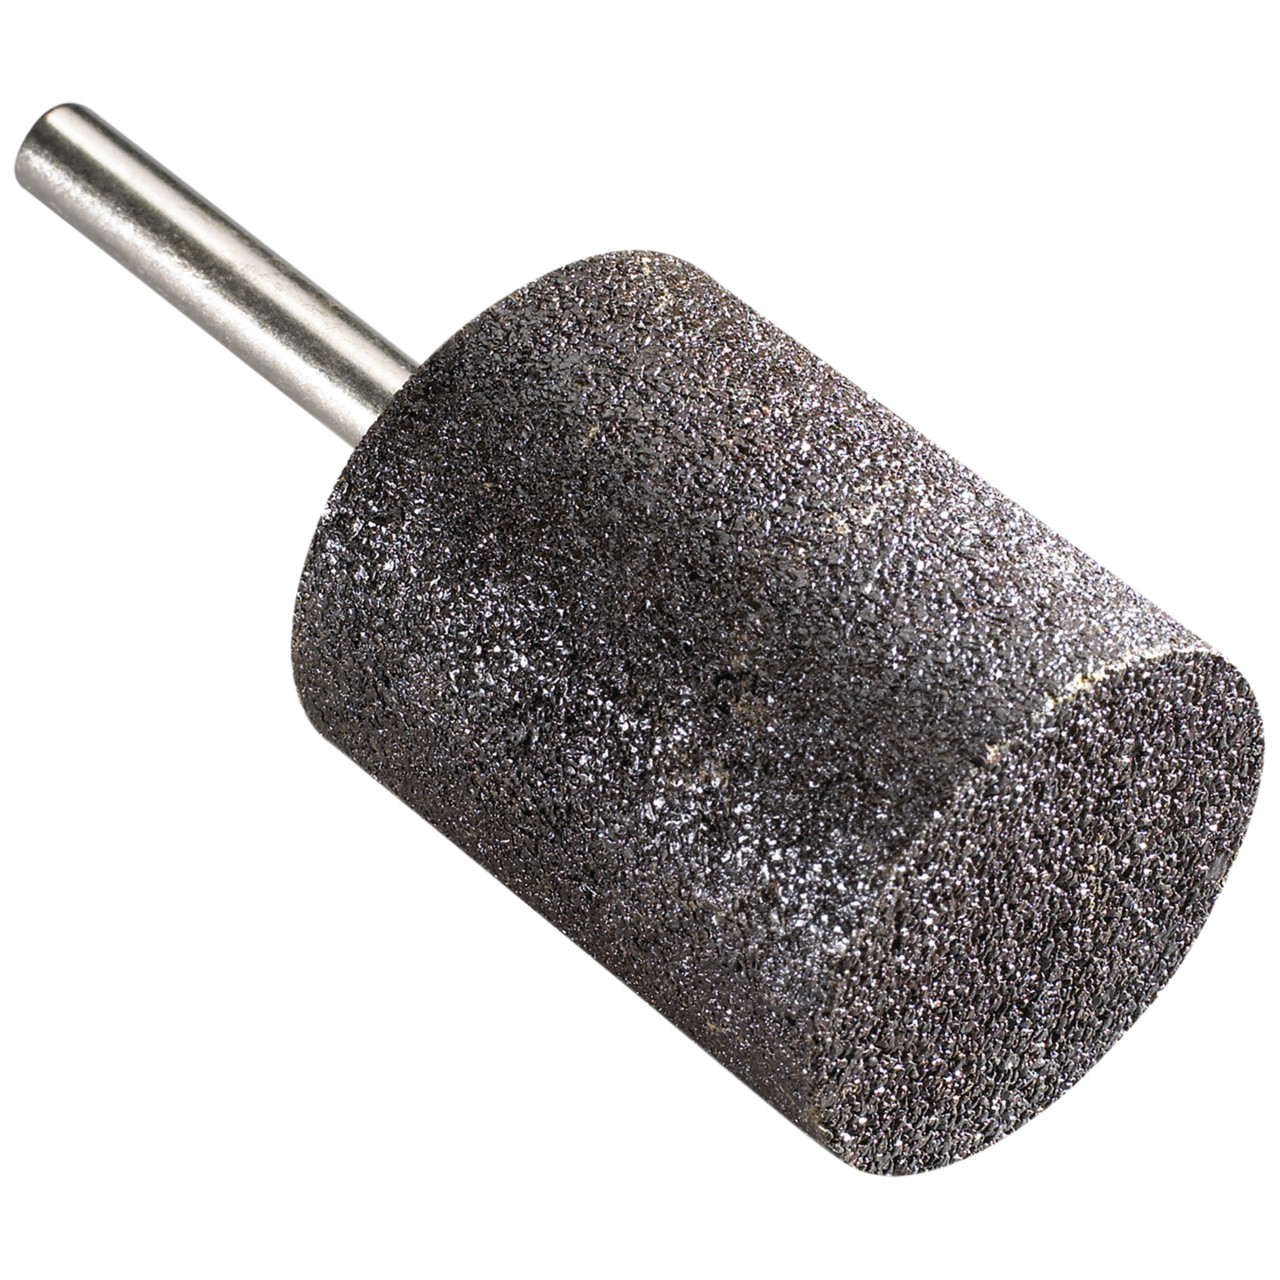 Tyrolit Punti montati in resina DxT-SxL 25x32-6x40 Per ghisa, forma: 52ZY - cilindro (punto montato), Art. 2211